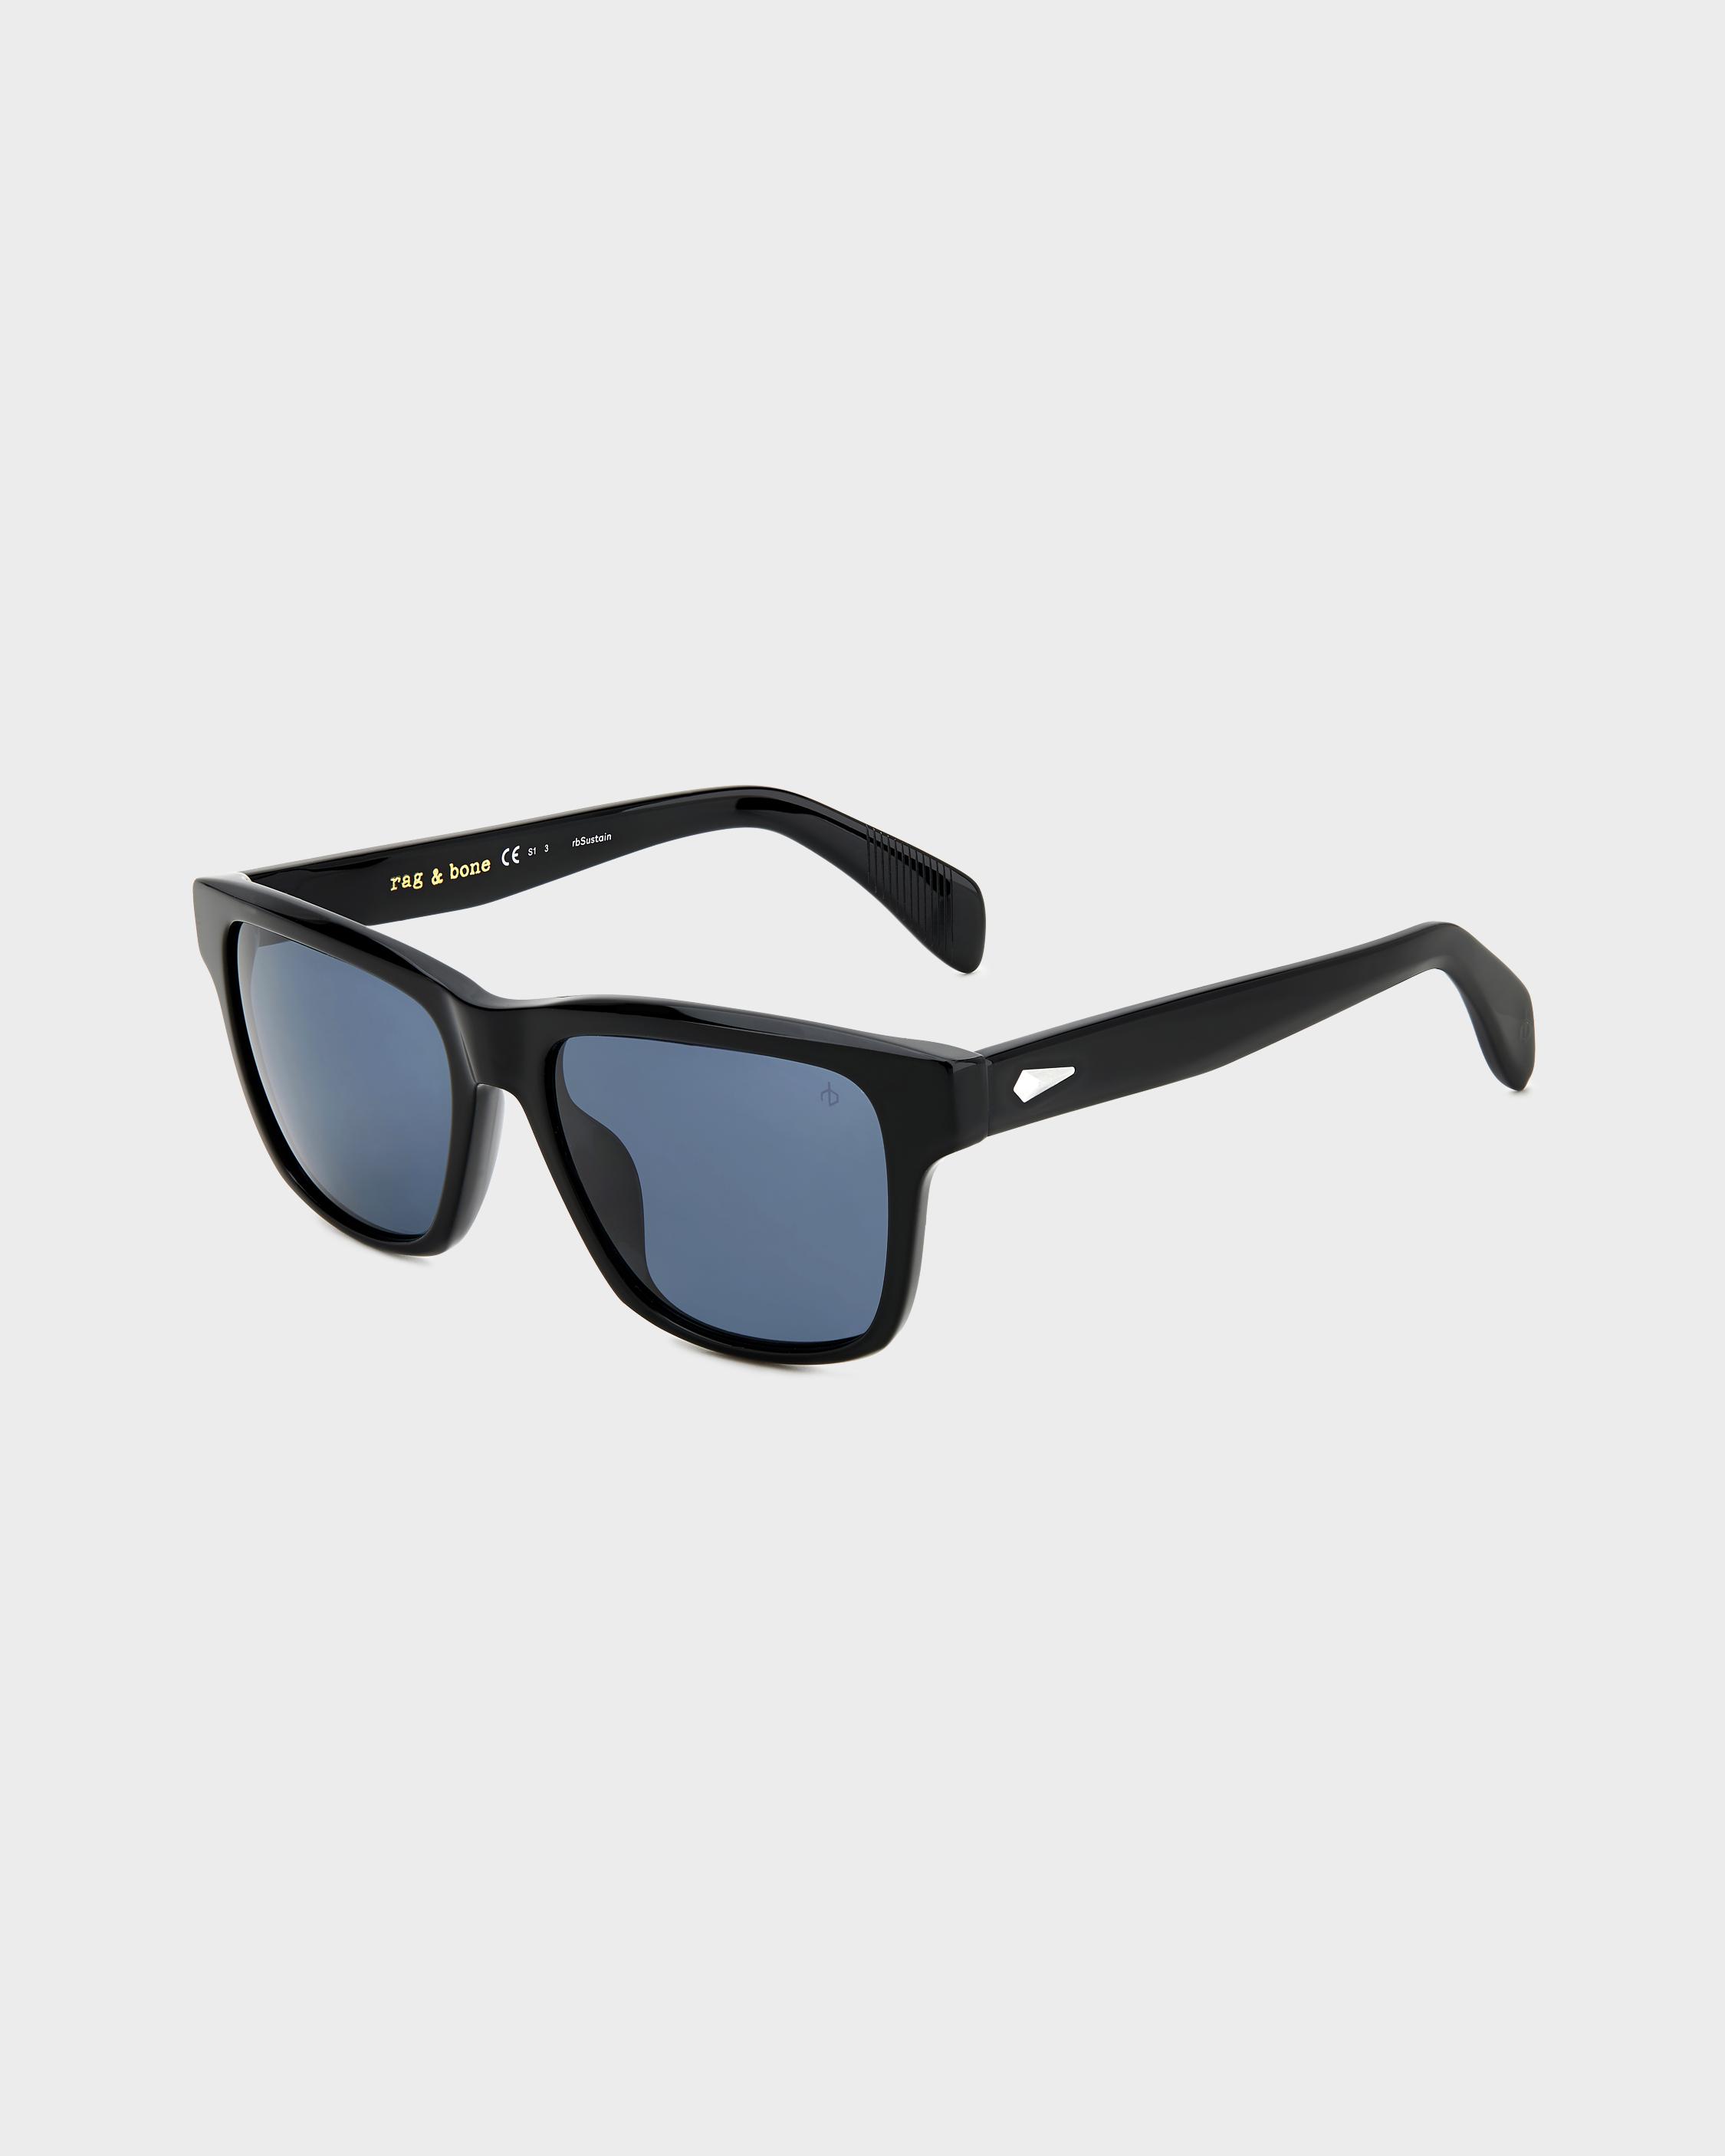 Sunglasses in Unisex, Urban Style | rag & bone